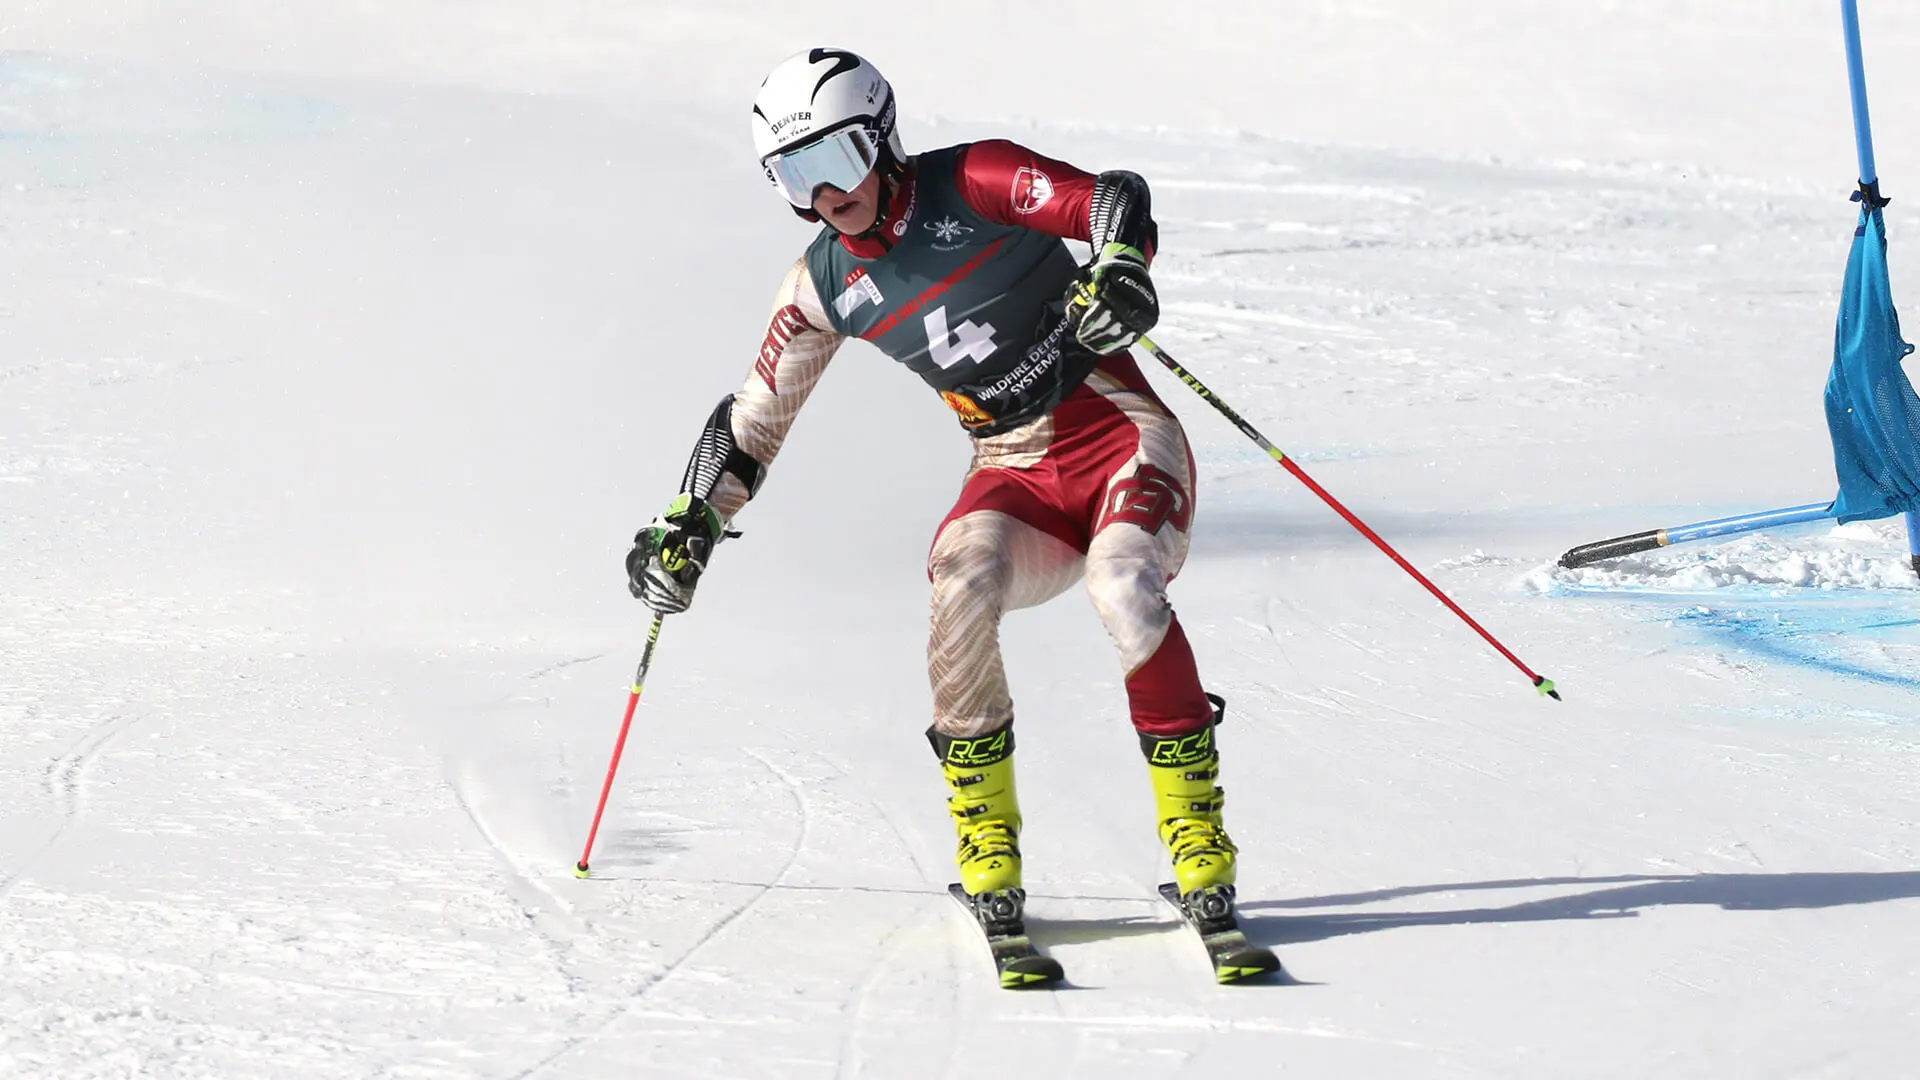 Jett Seymour US Ski Team - counter